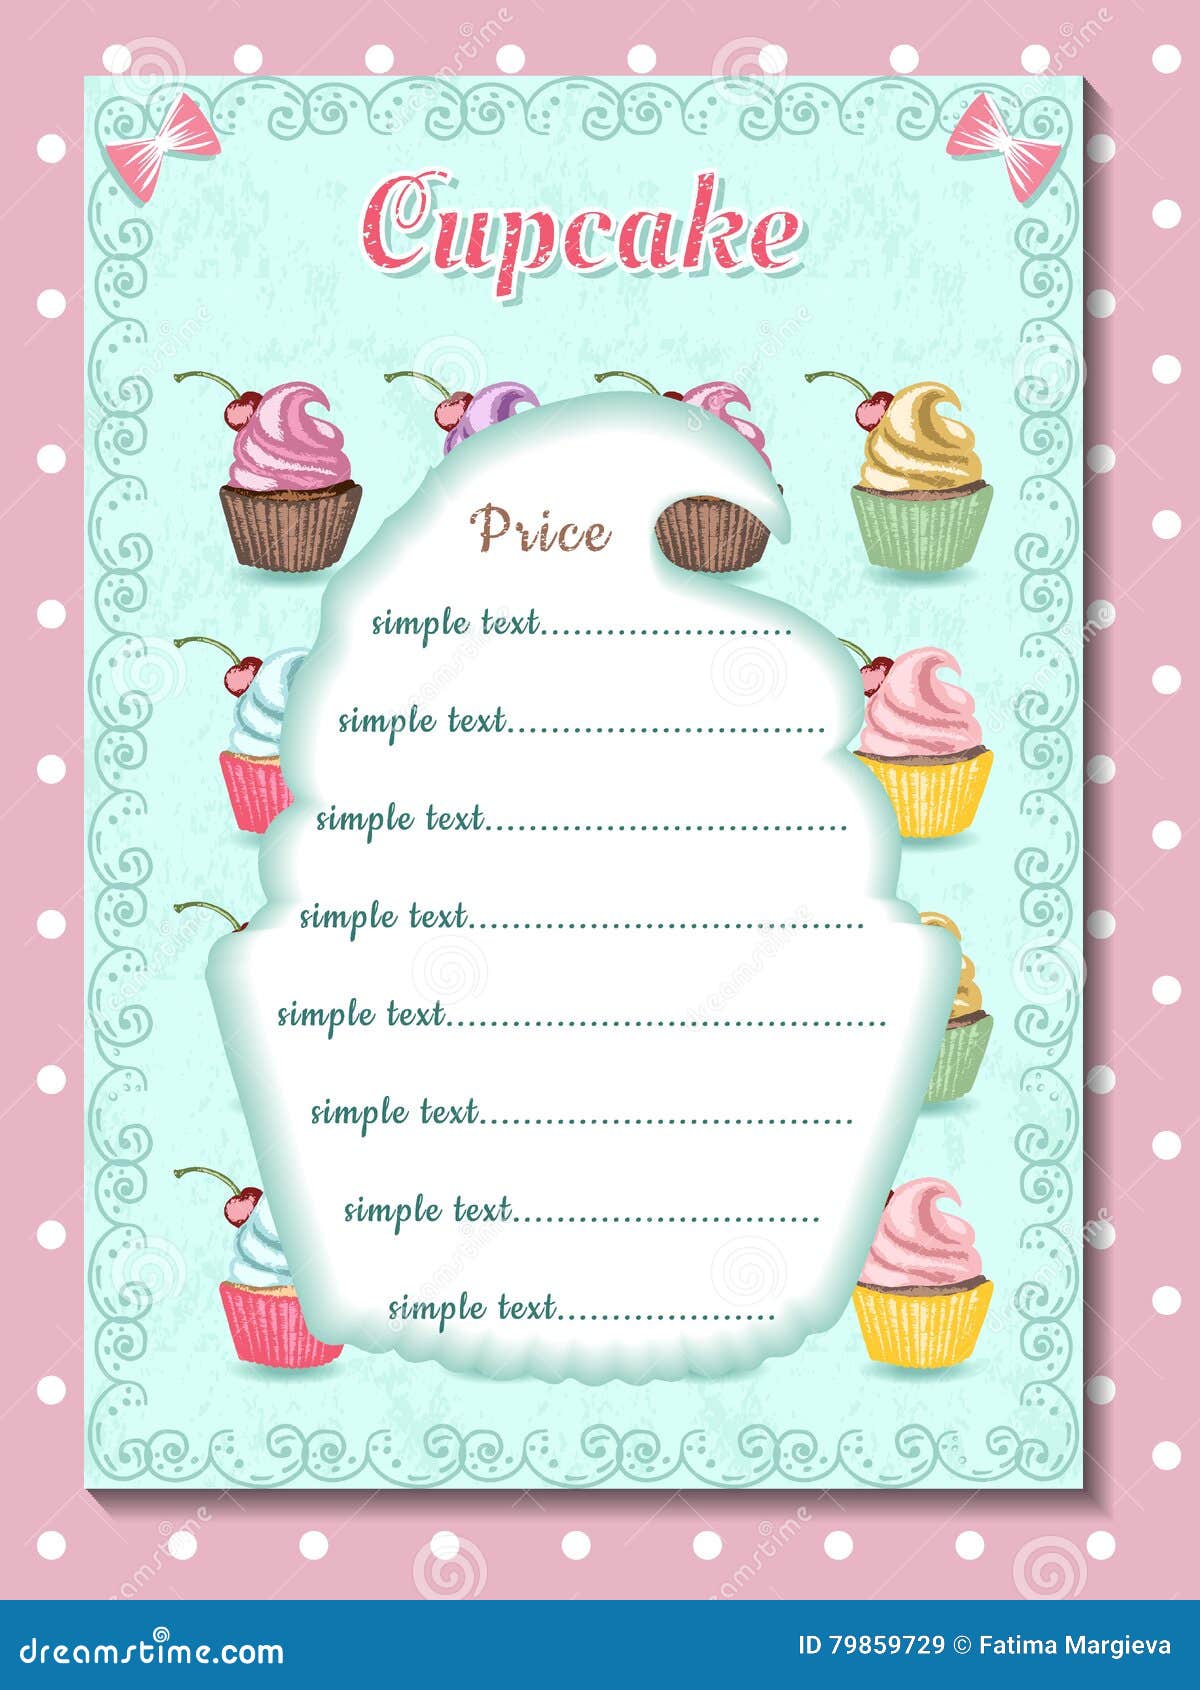 Template Of Price List For Cupcake Design Of Desert Menu Stock Vector Illustration Of Food Frame 79859729